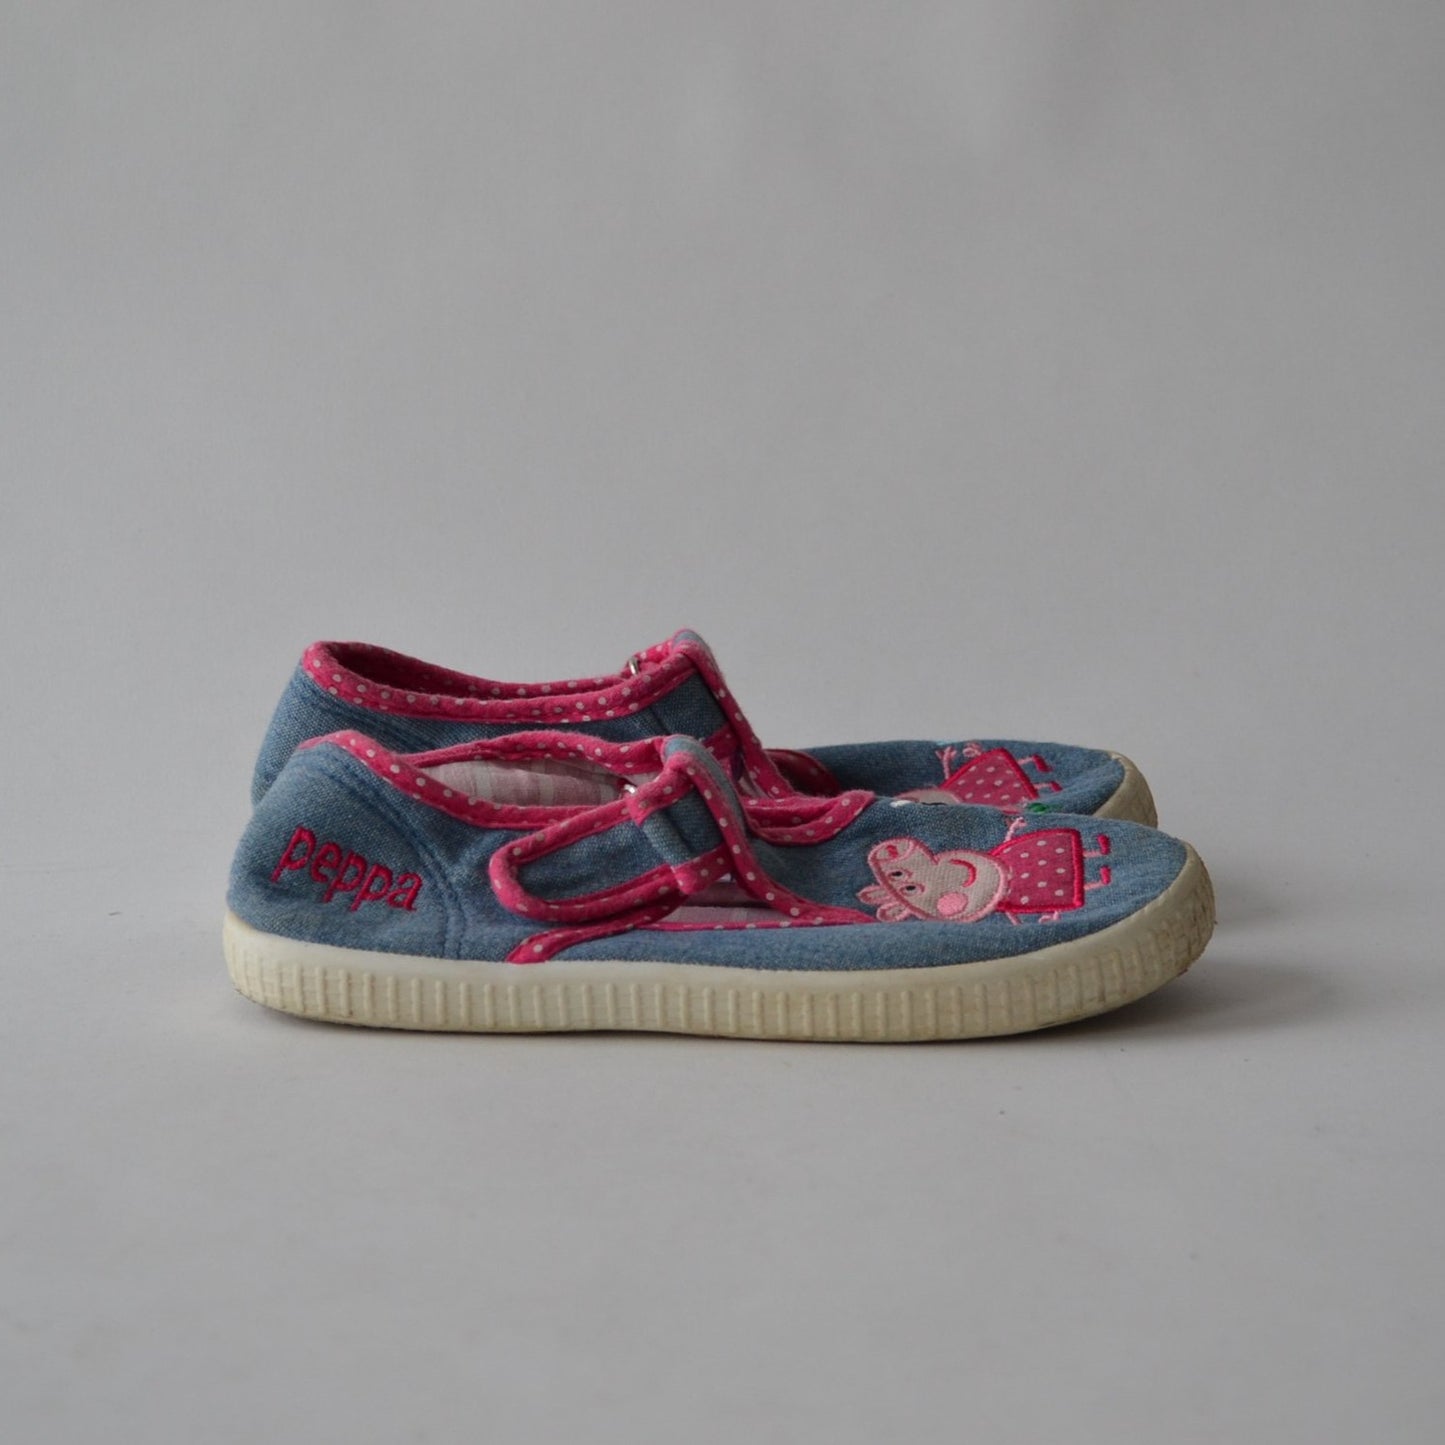 Peppa Pig Shoes Shoe Size 12 (jr)